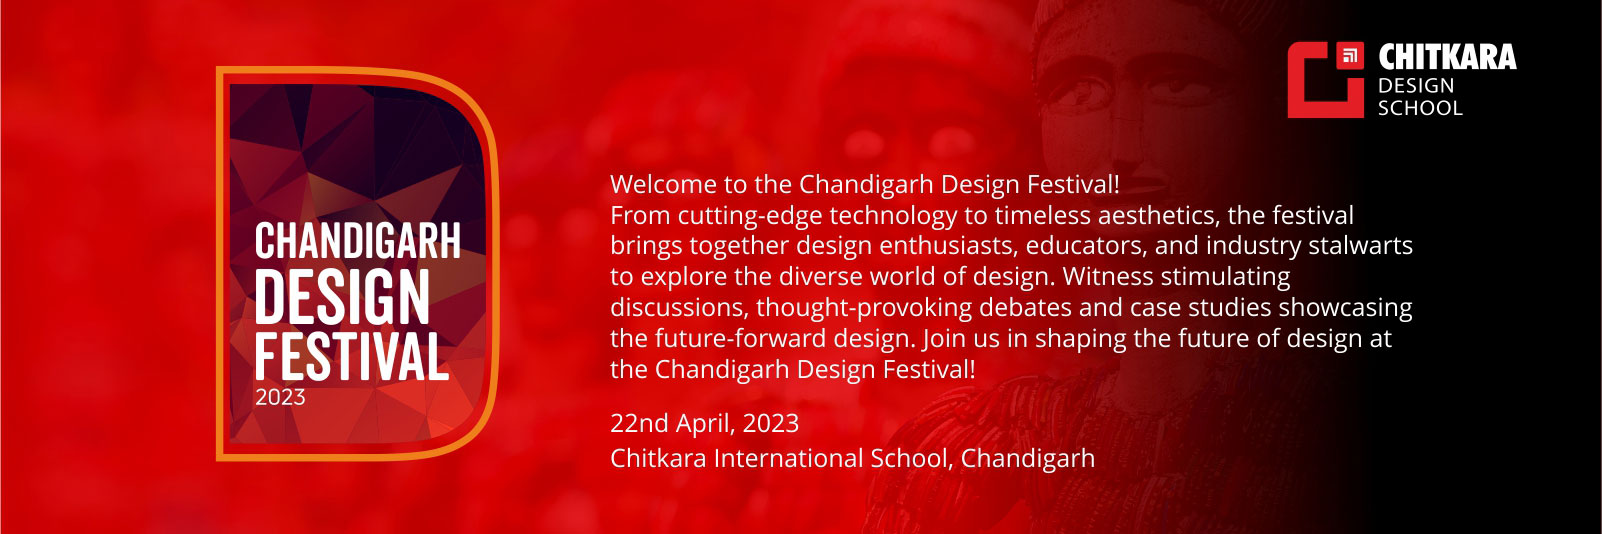 Chandigarh Design Festival 2023